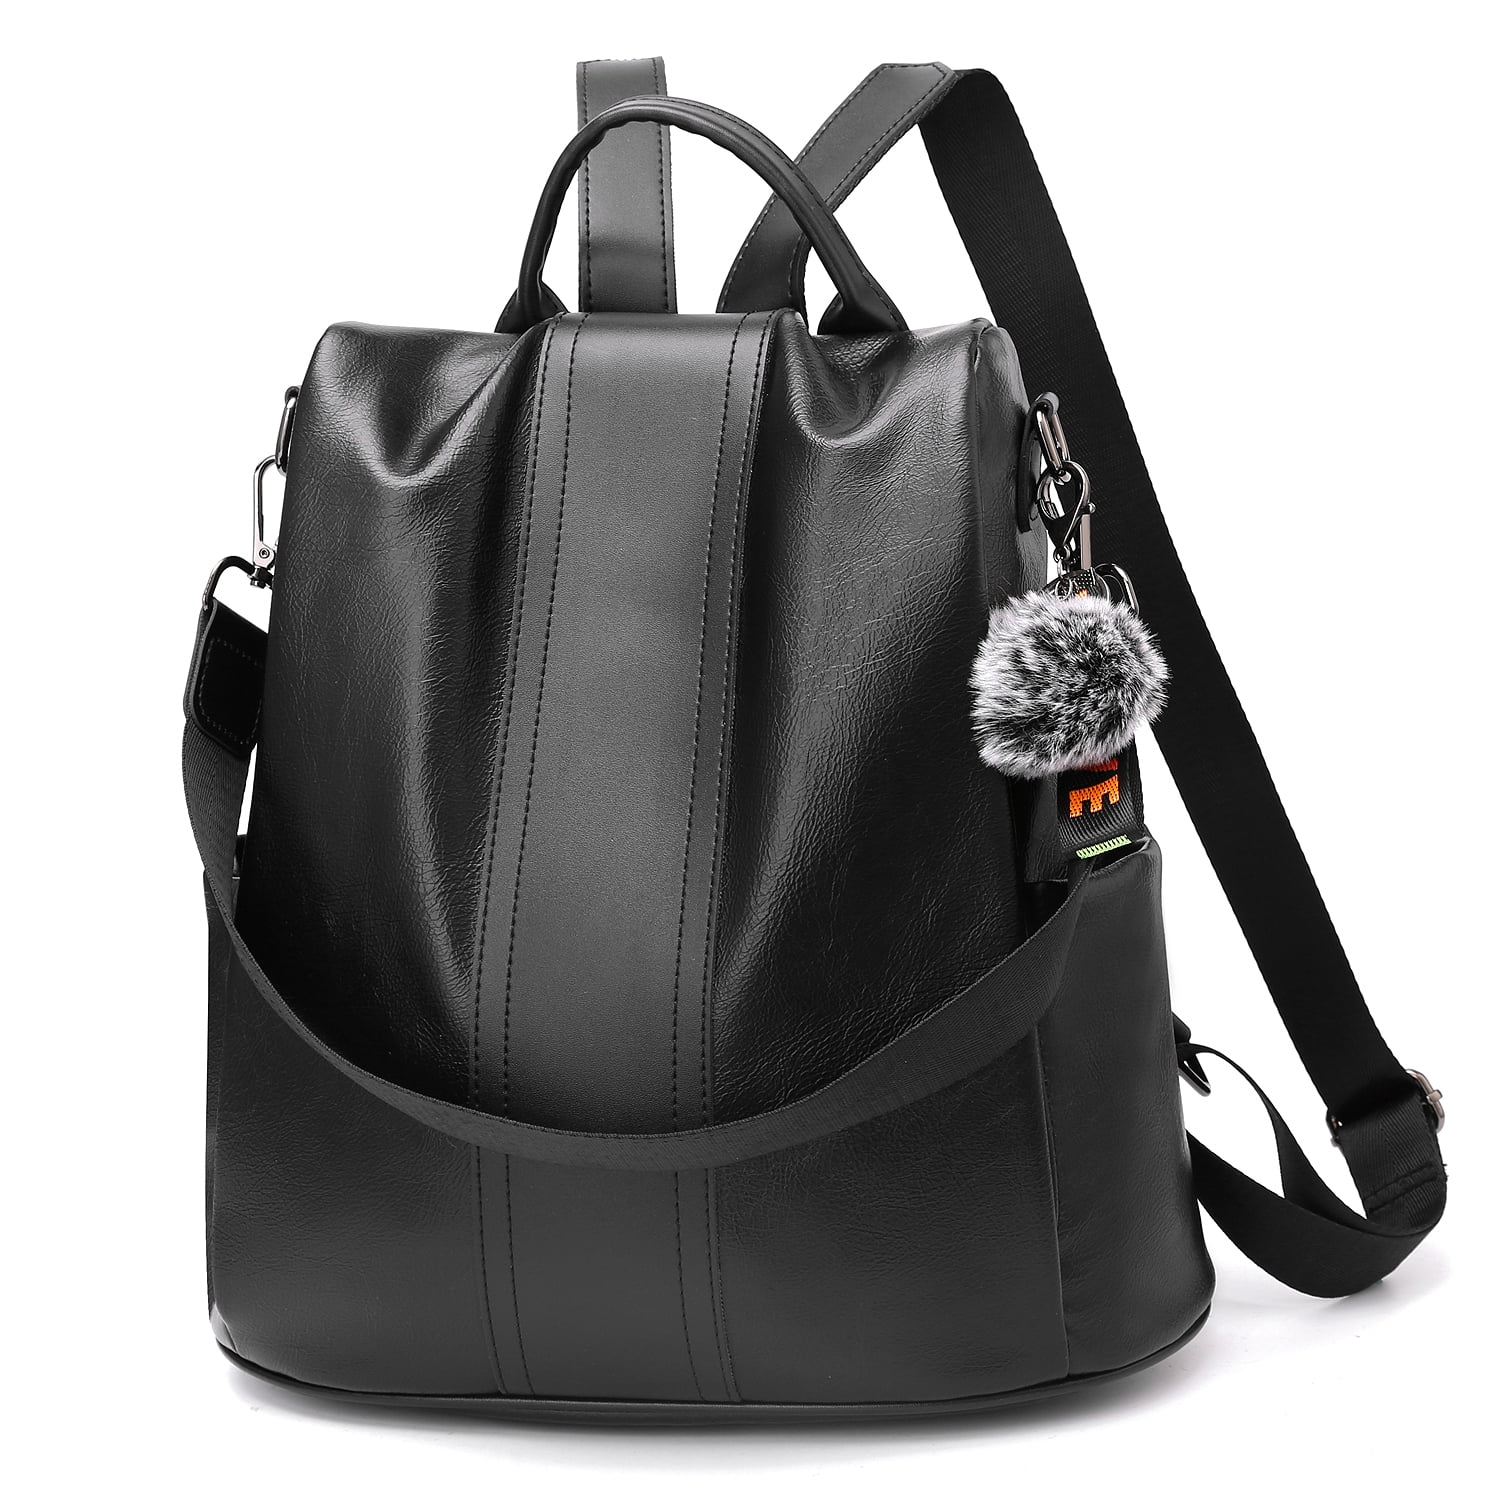 YNIQUE Backpack Purse for Women Fashion School Purse and Handbags ...